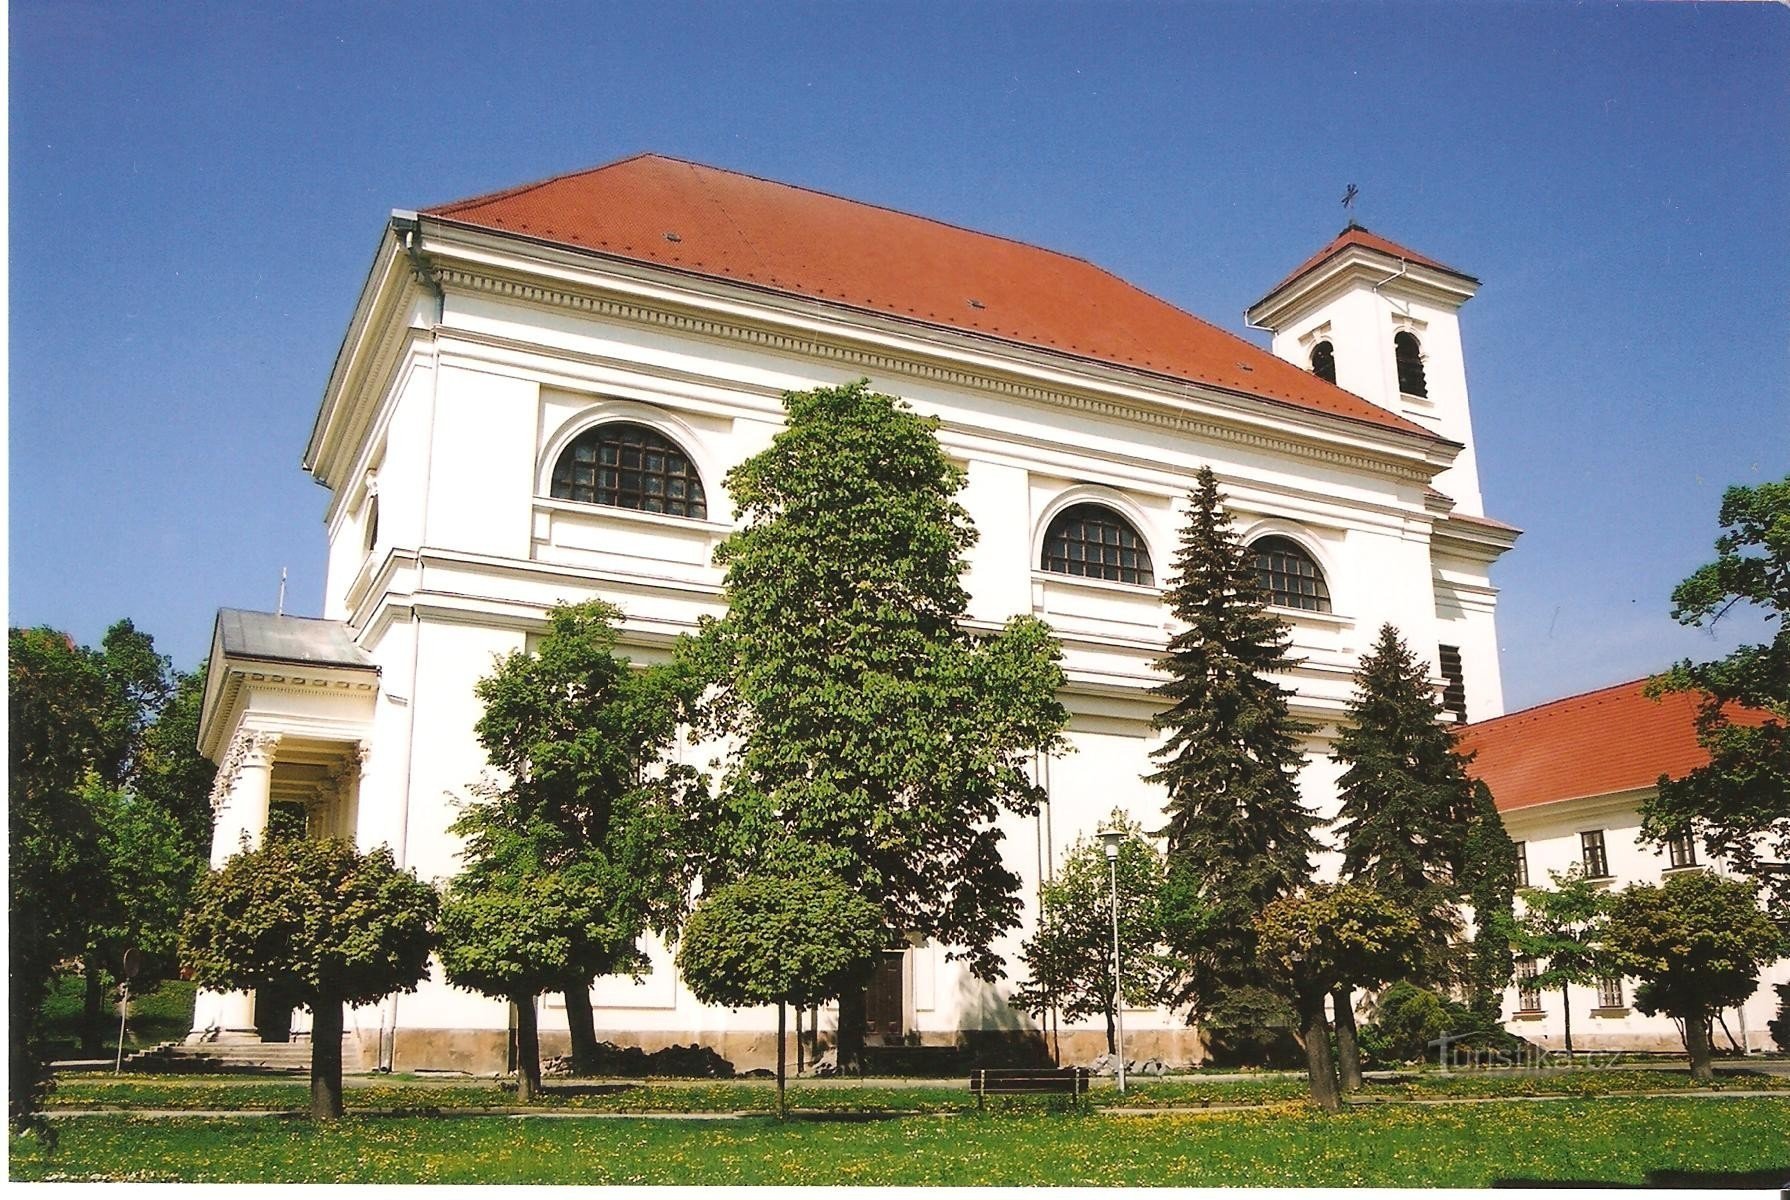 Slavkov - kirkko